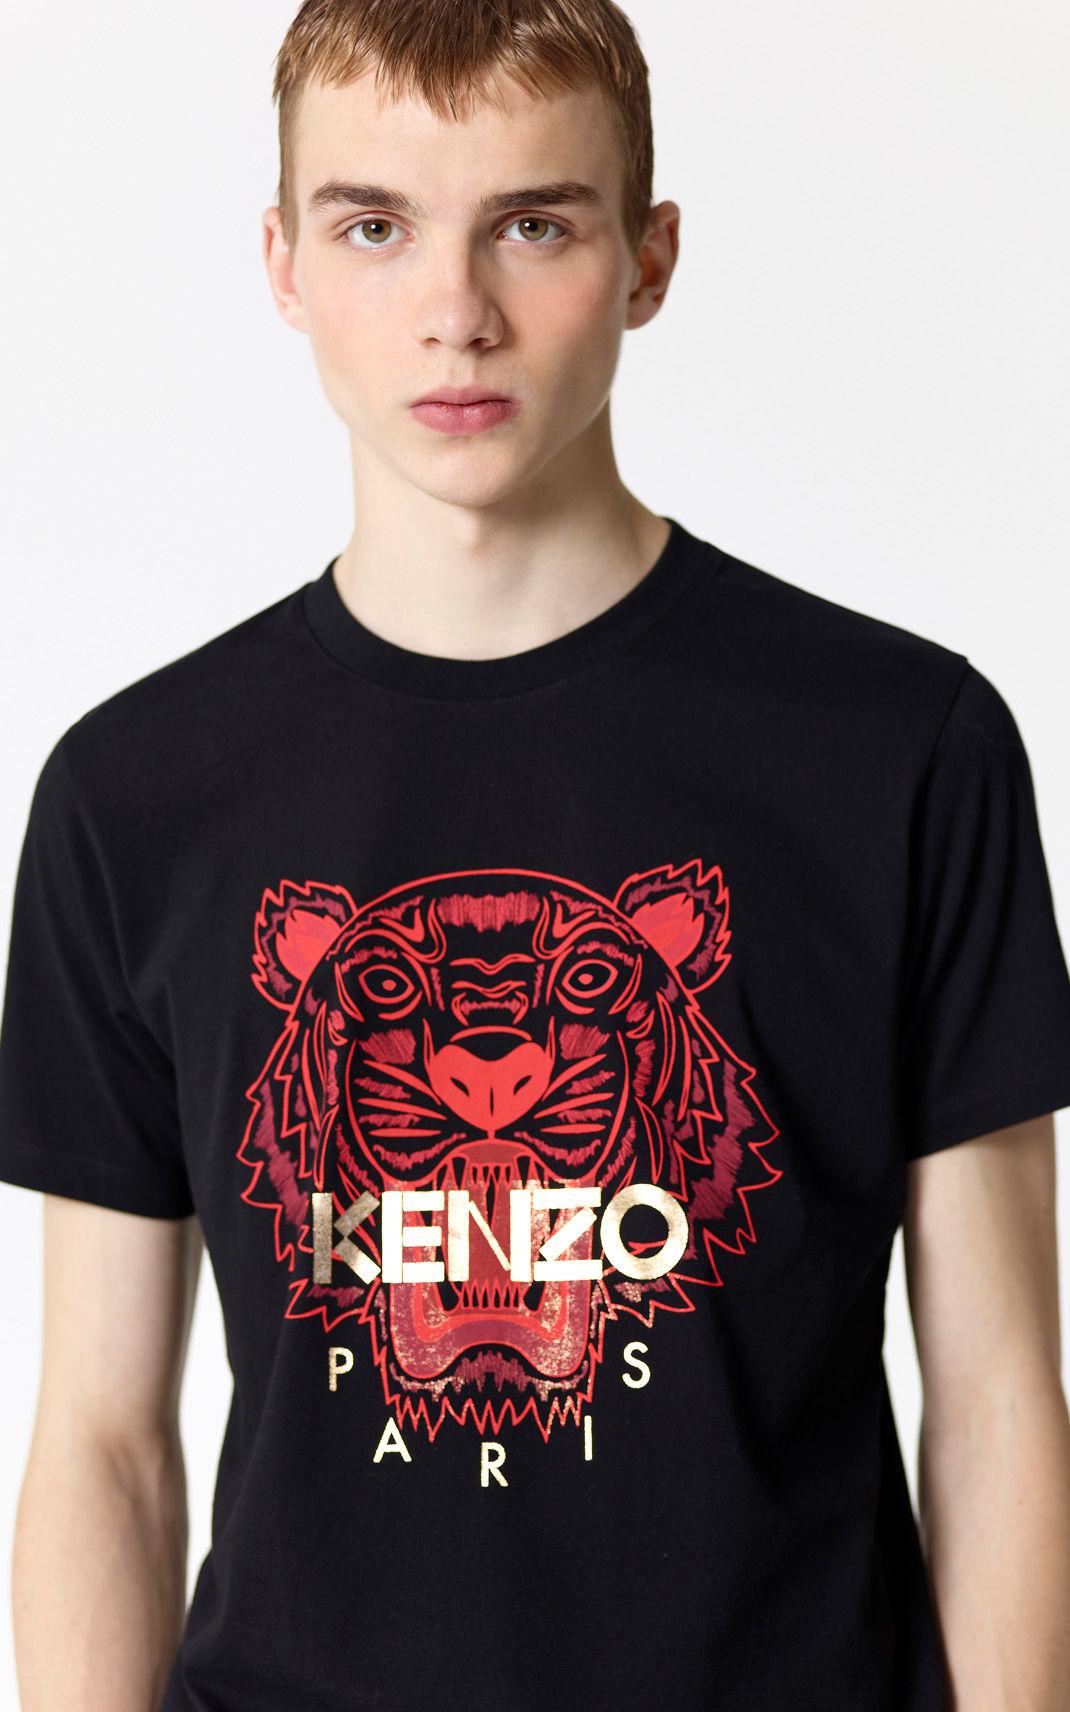 Kenzo T Shirt Singapore